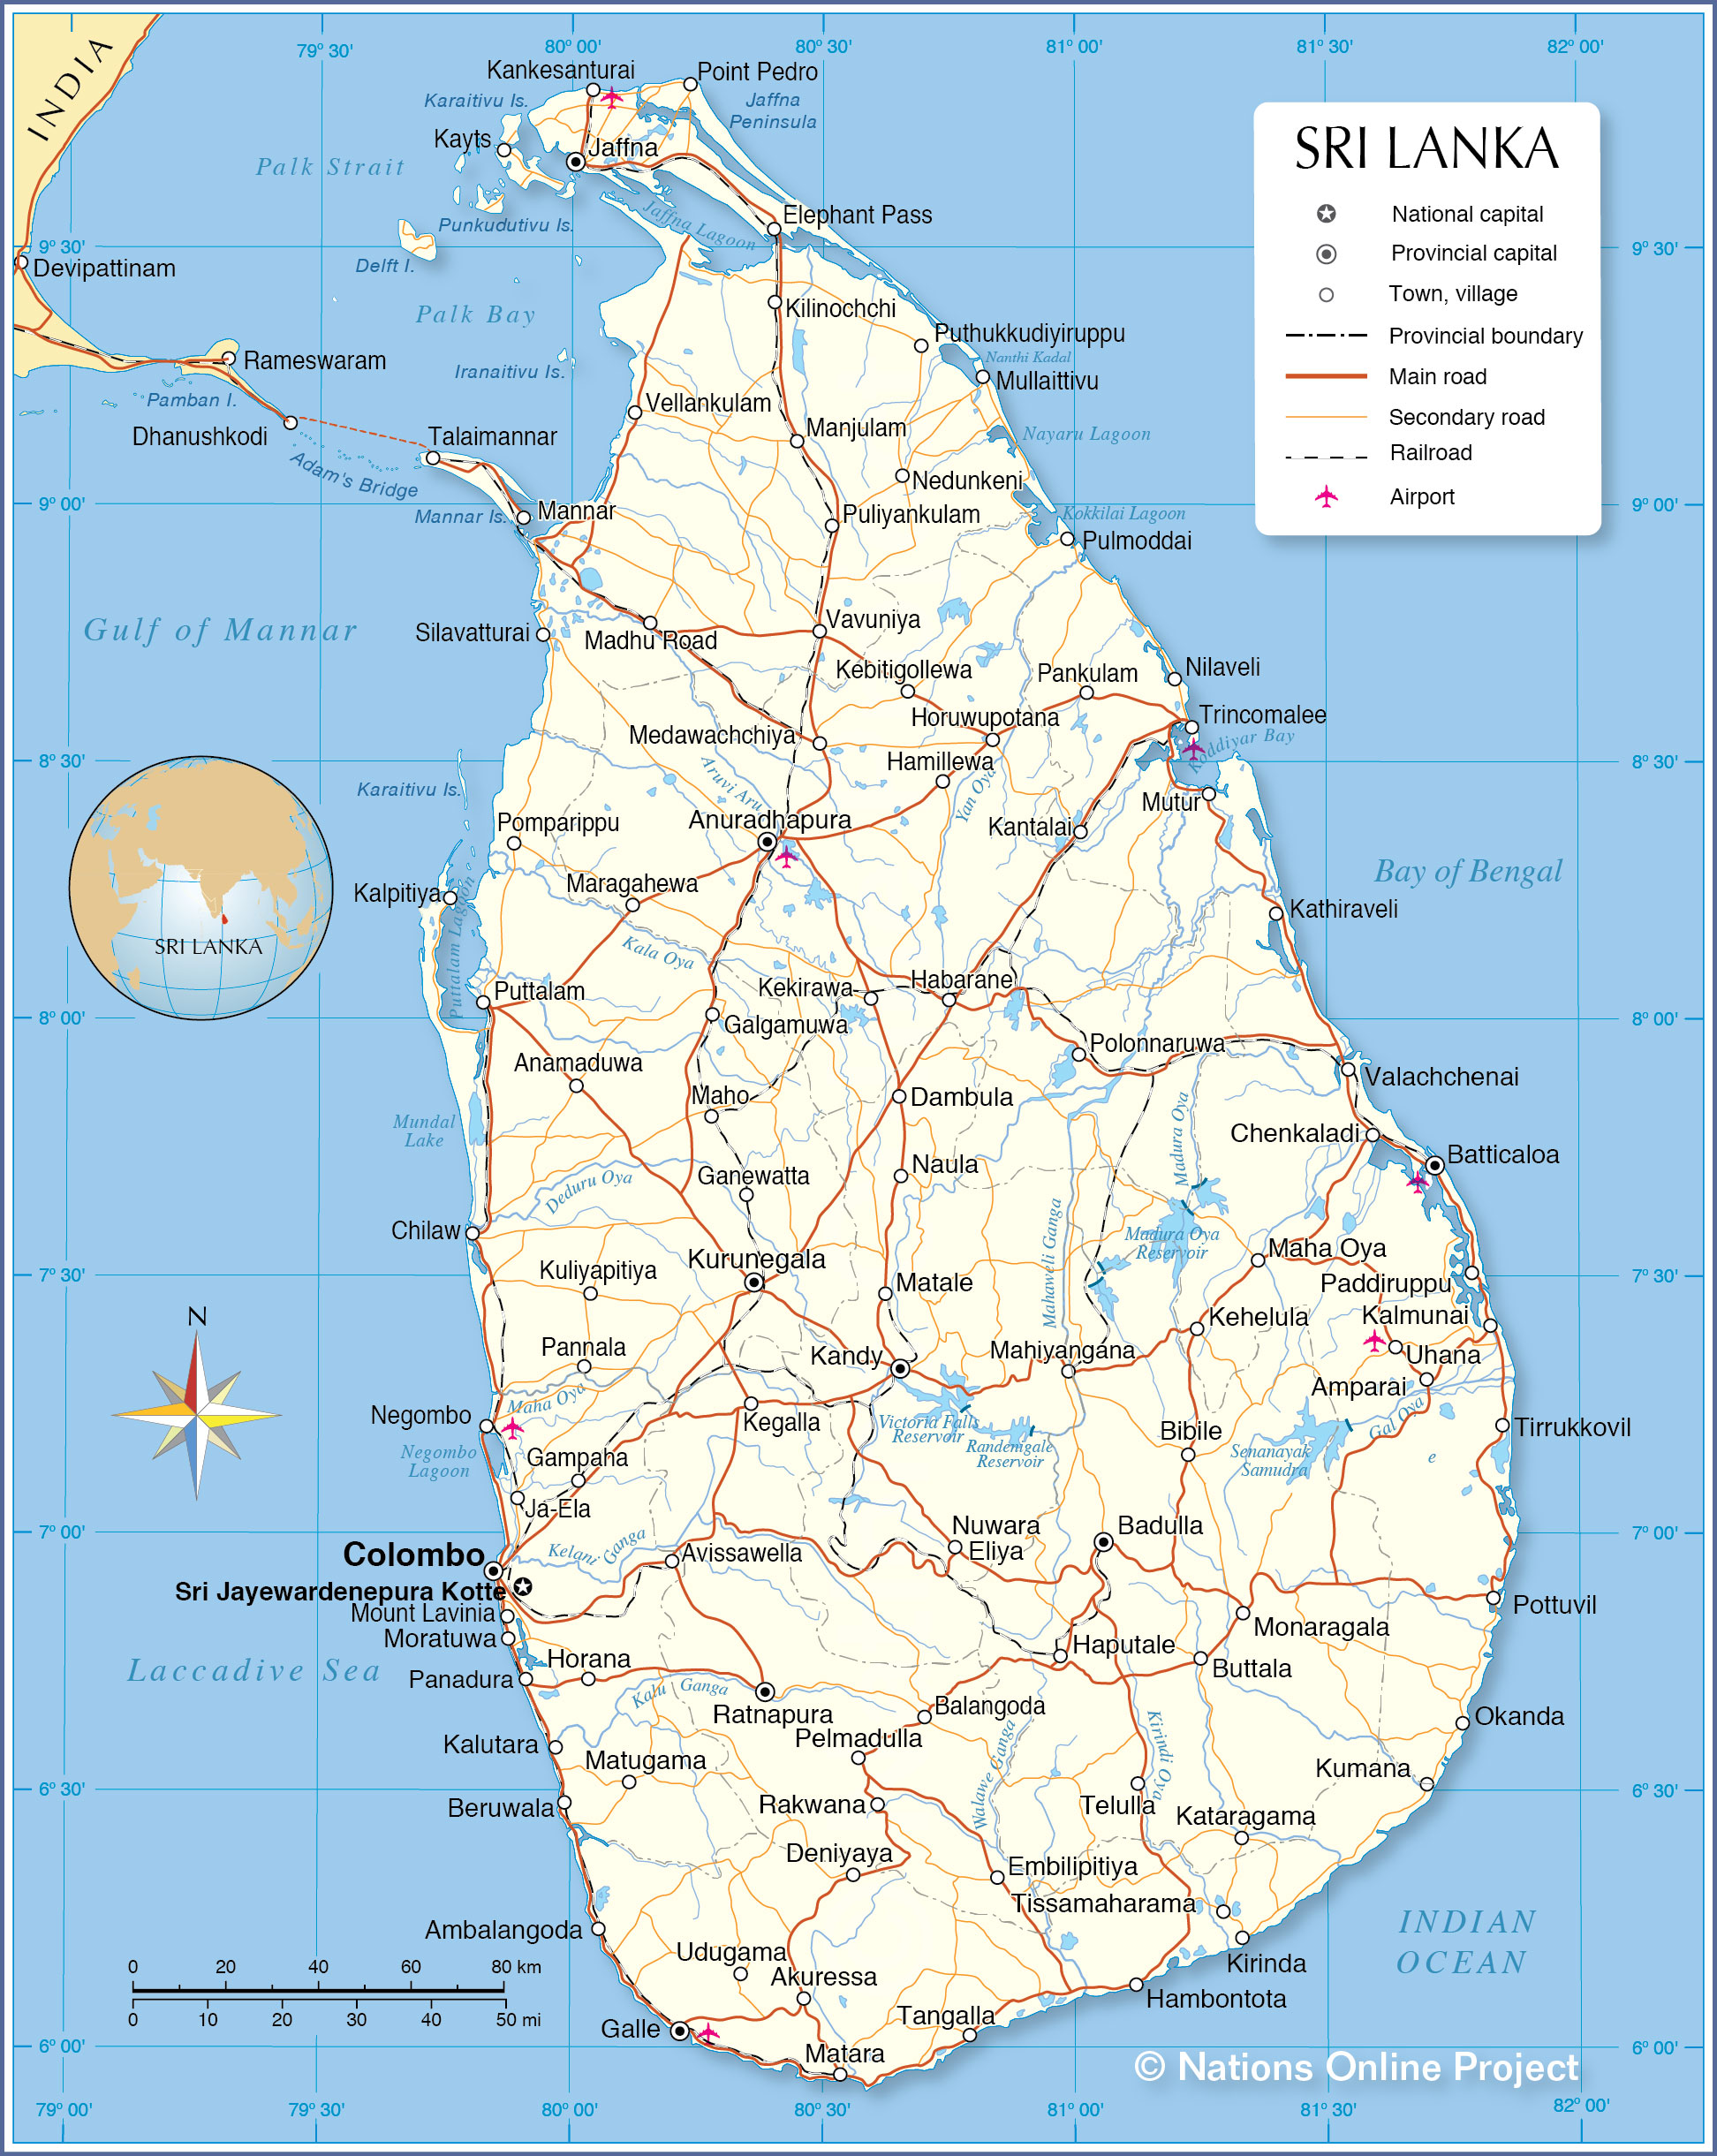 Sri Lanka Km Map Political Map Of Sri Lanka - Nations Online Project